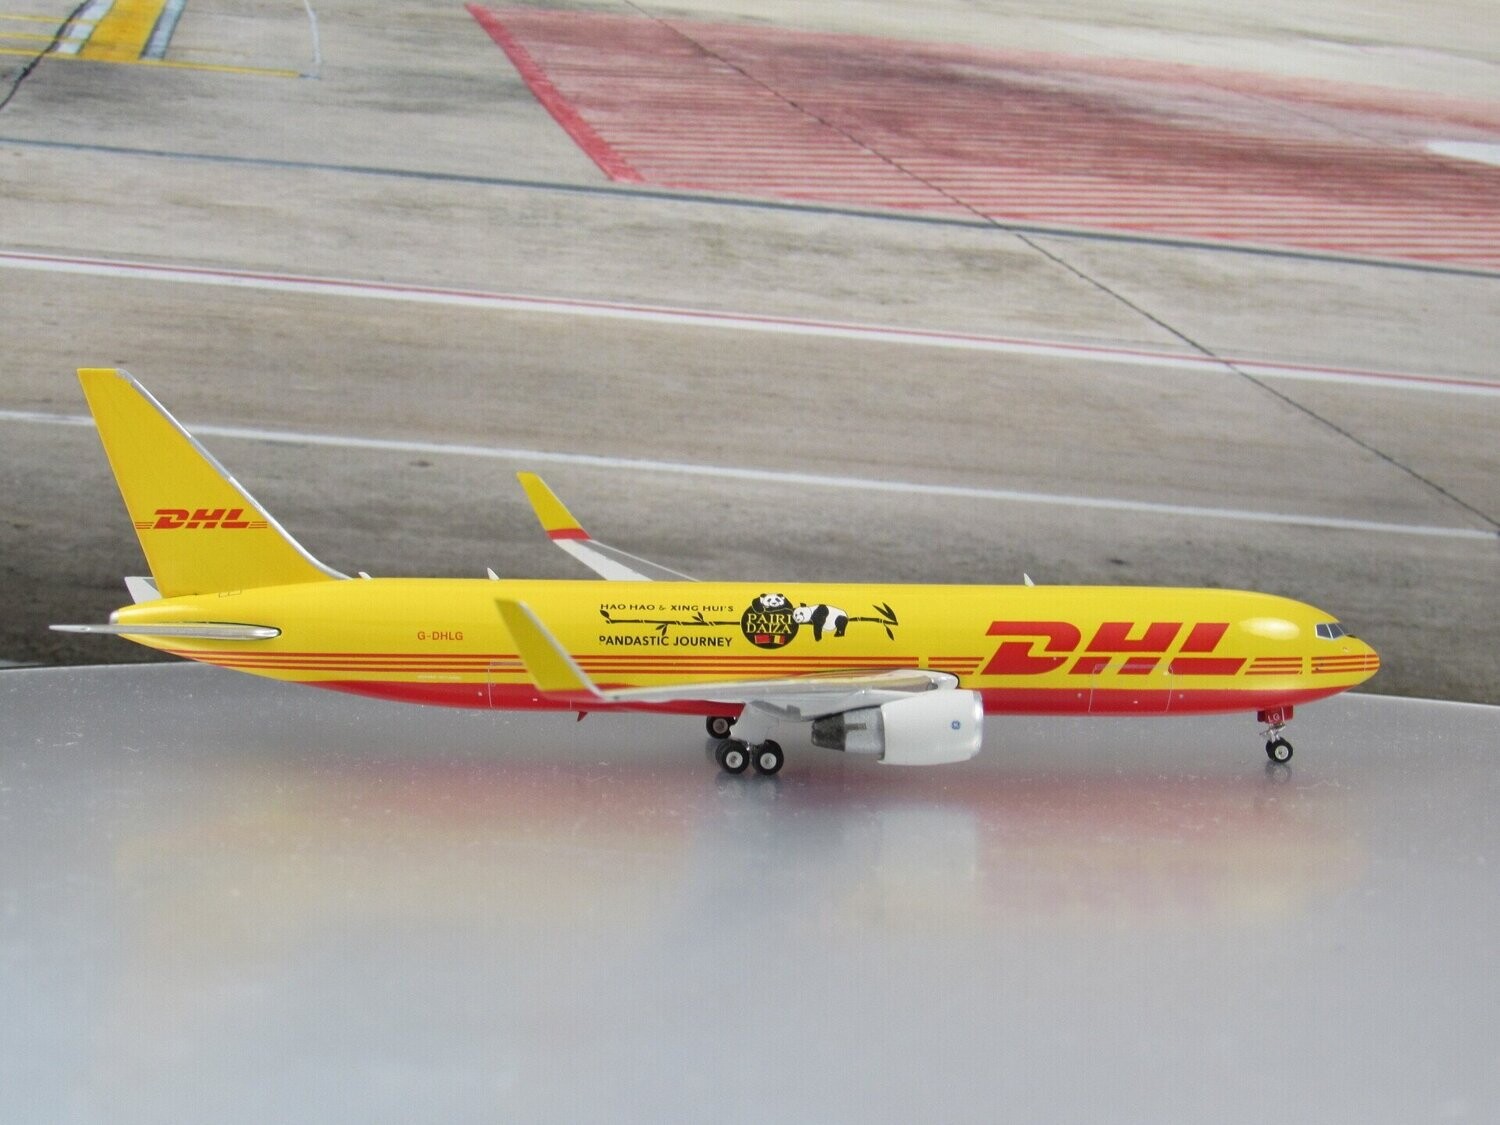 1/400 scale DHL 767-300ER Pandastic Journey Livery Reg No. G-DHLG